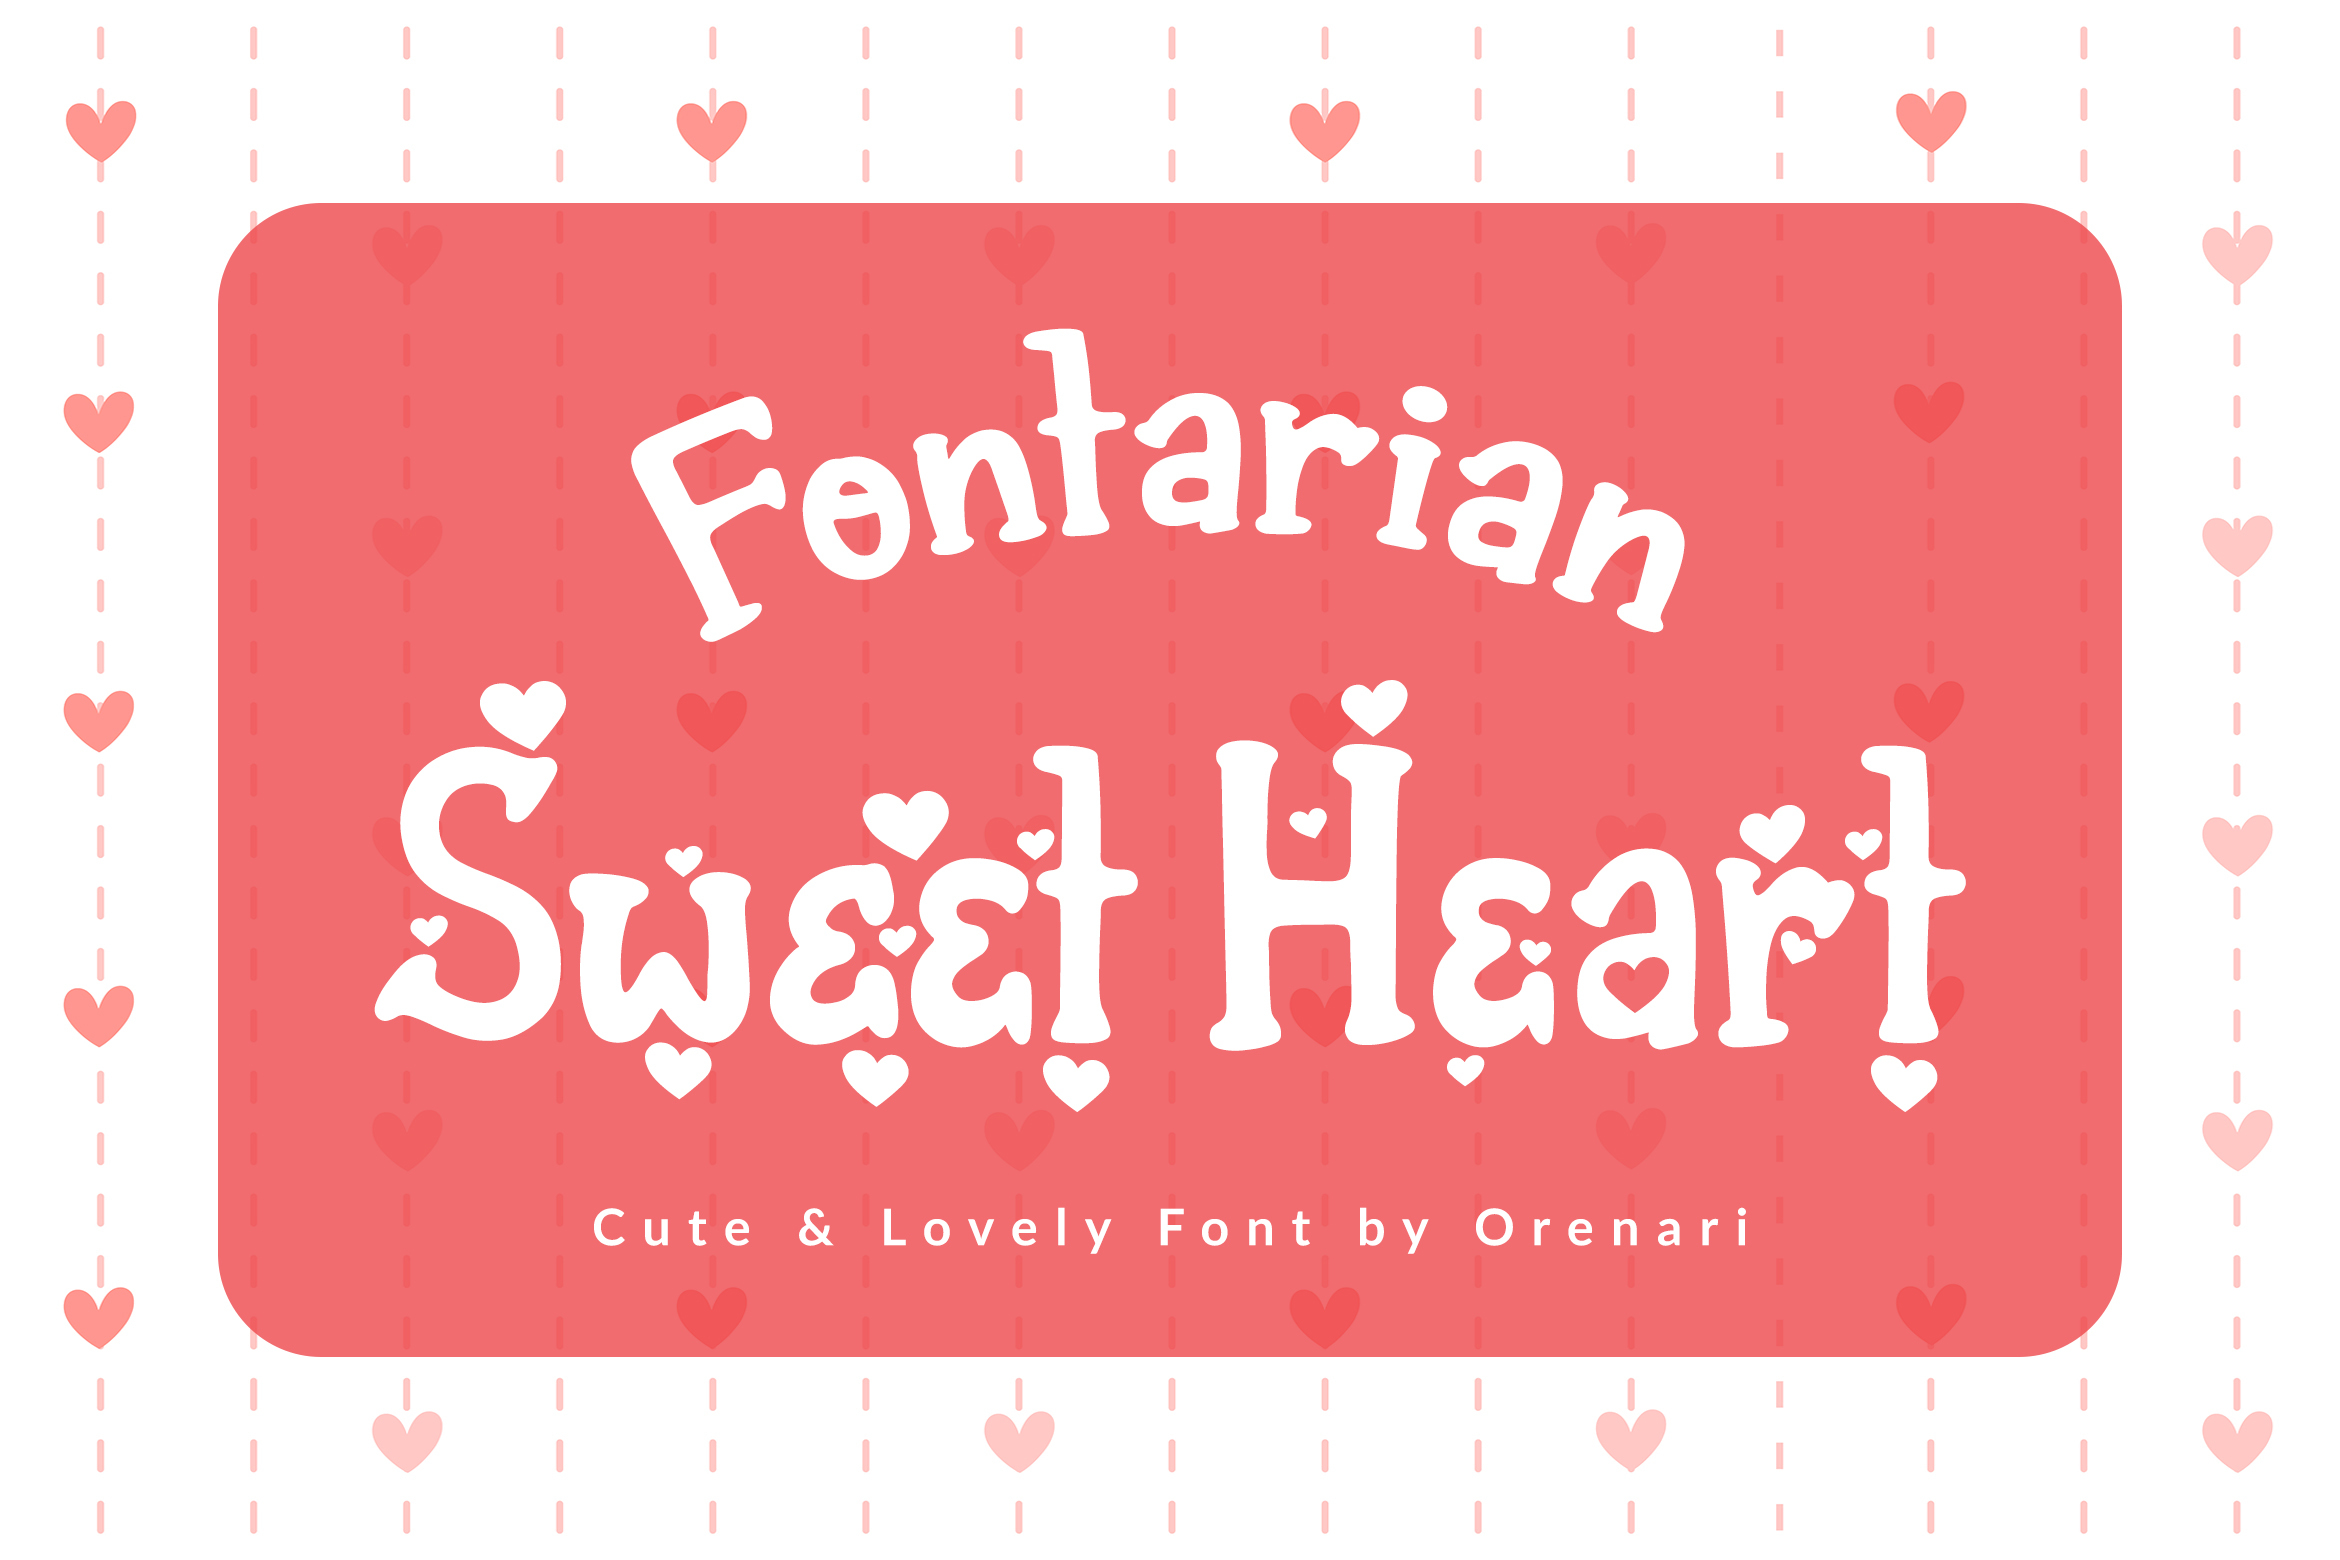 Fontarian Sweet Heart